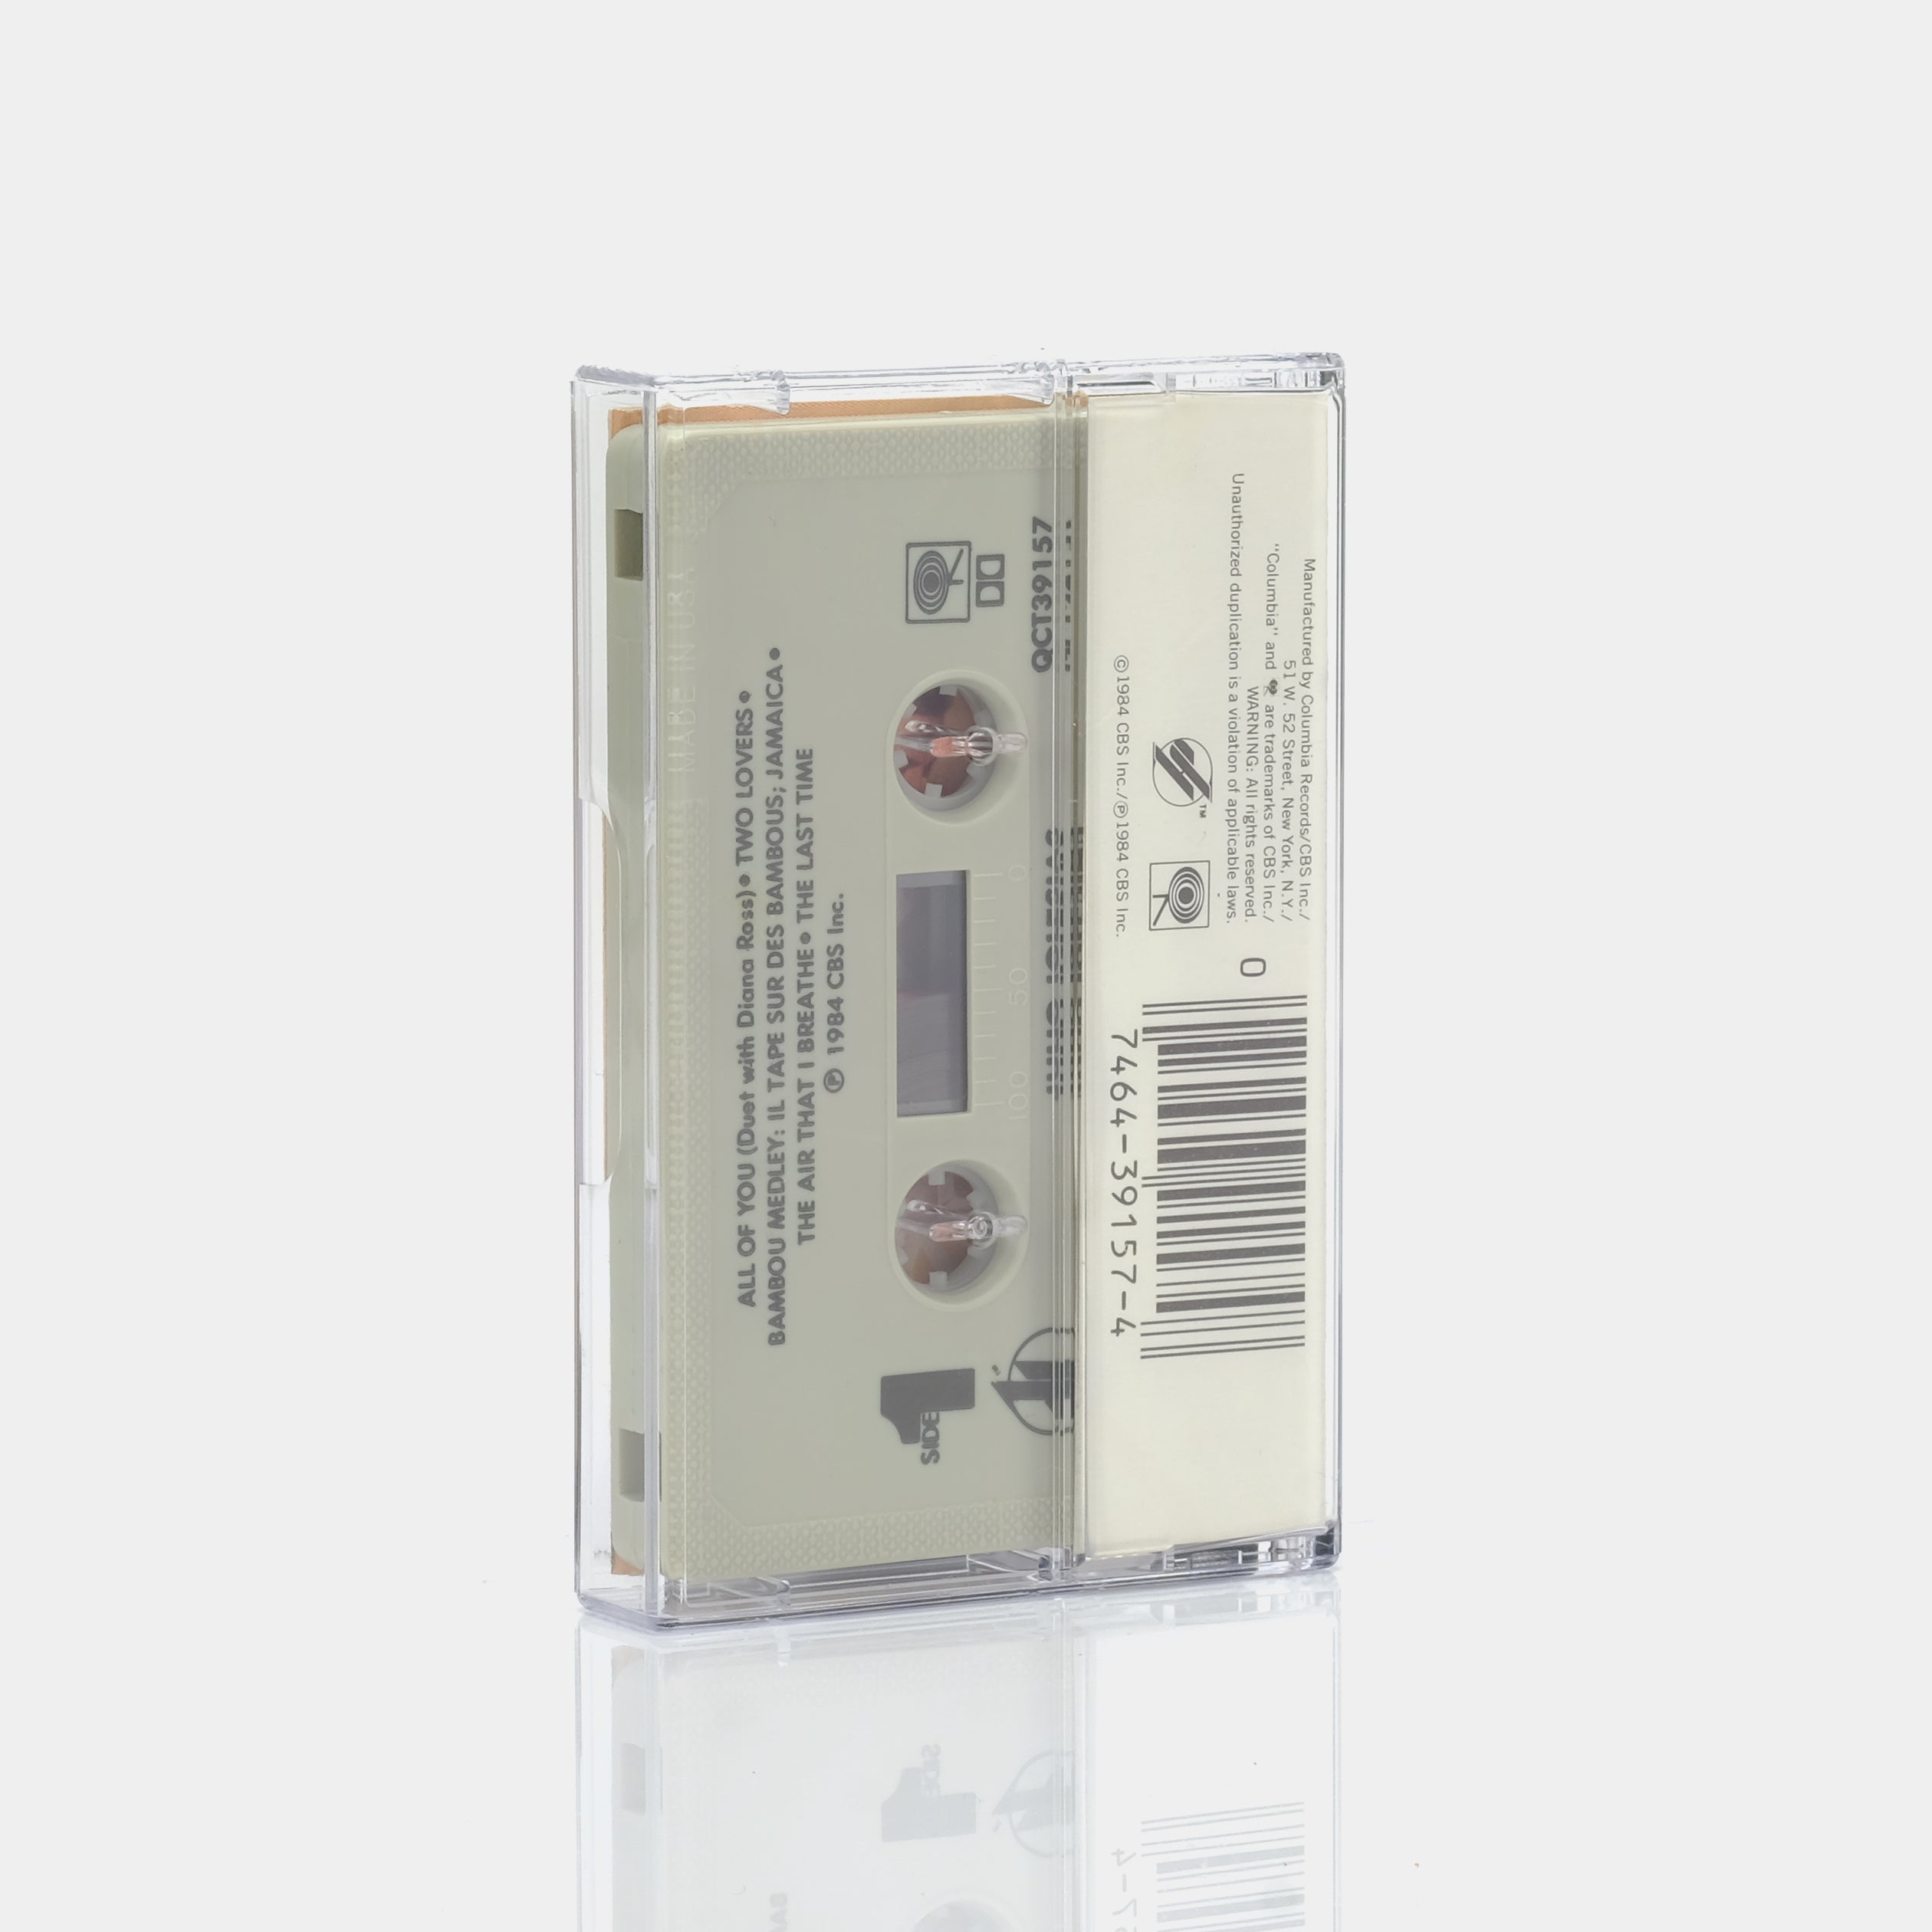 Julio Iglesias - 1100 Bel Air Place Cassette Tape